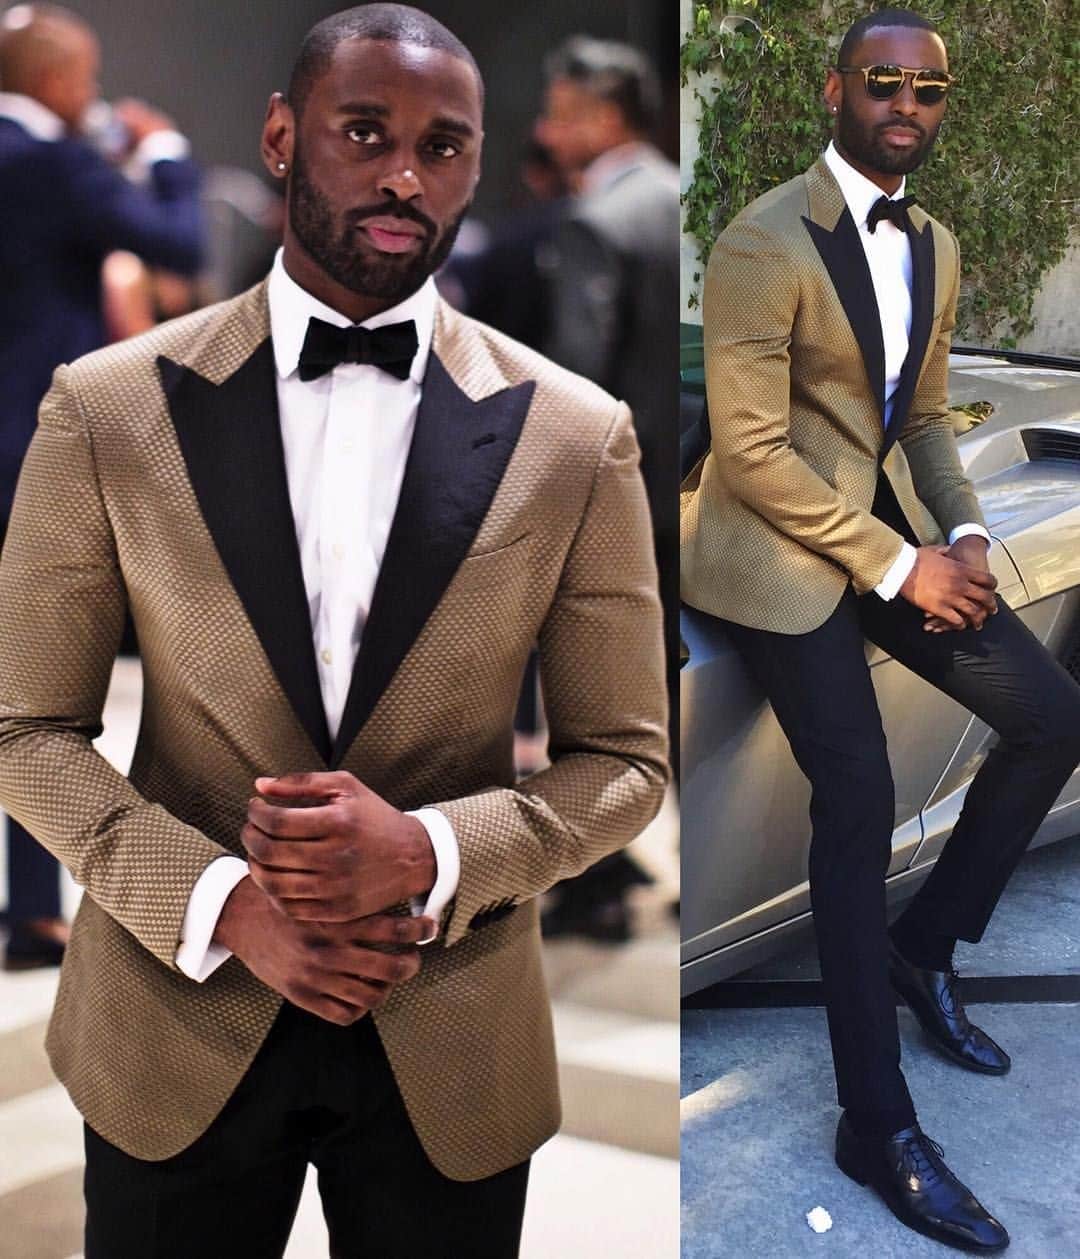  Latest men’s suit styles for weddings